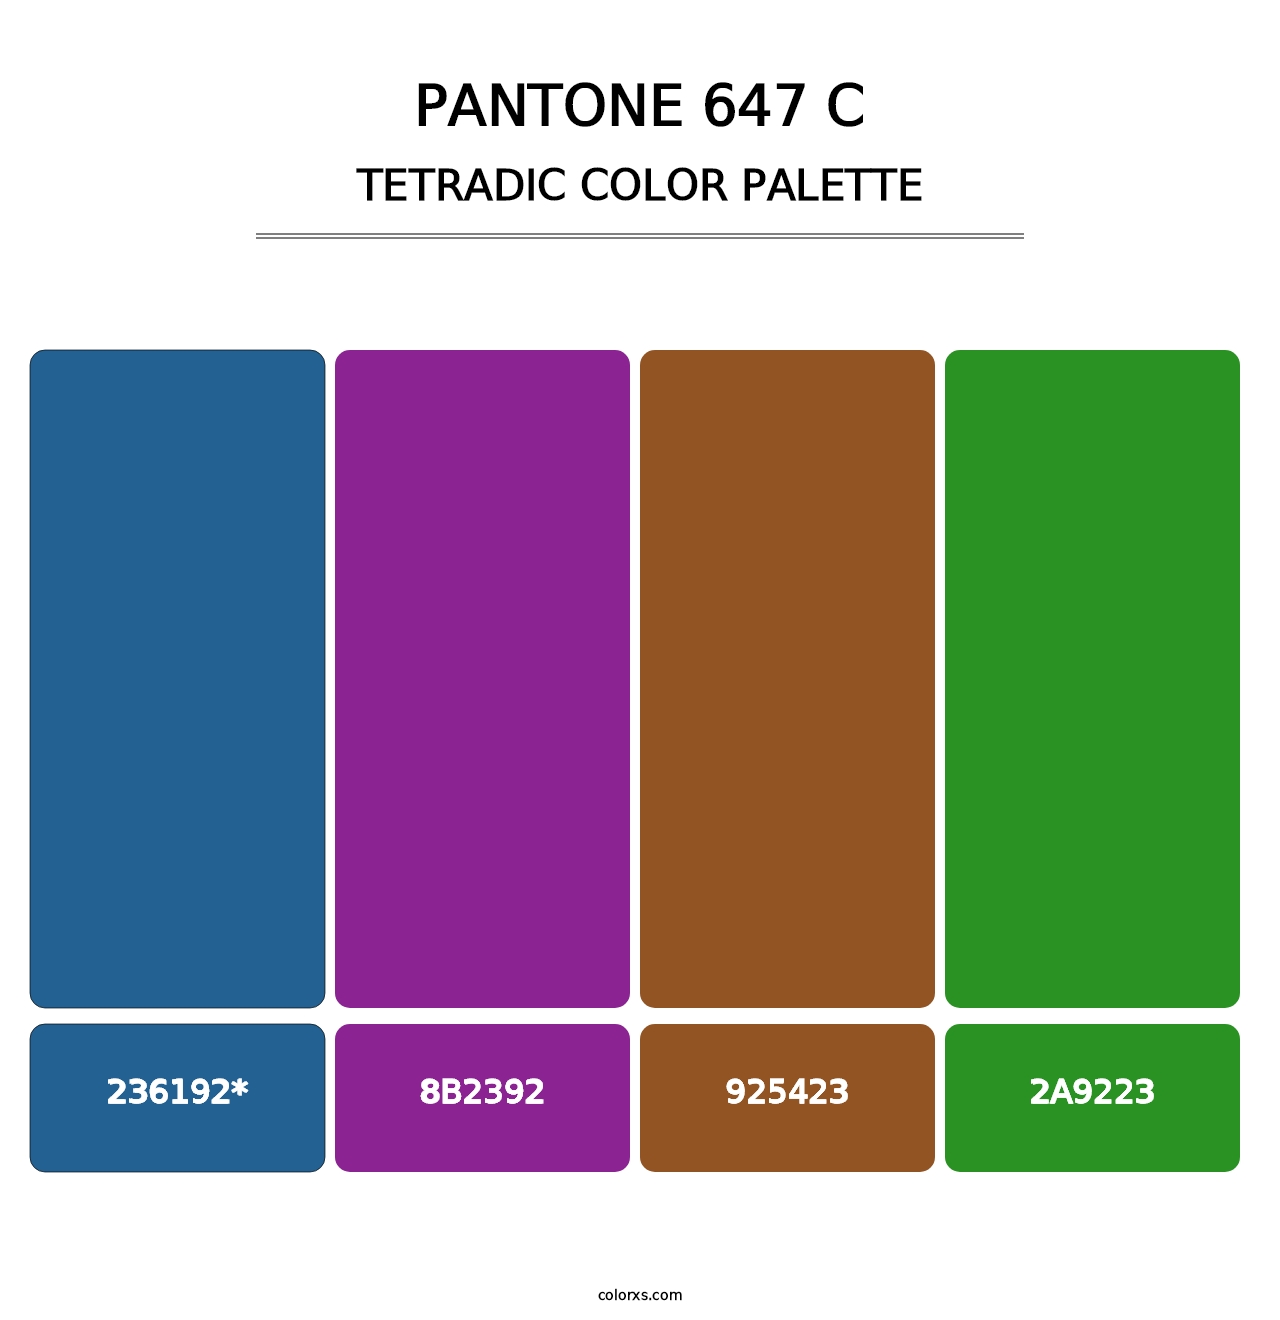 PANTONE 647 C - Tetradic Color Palette